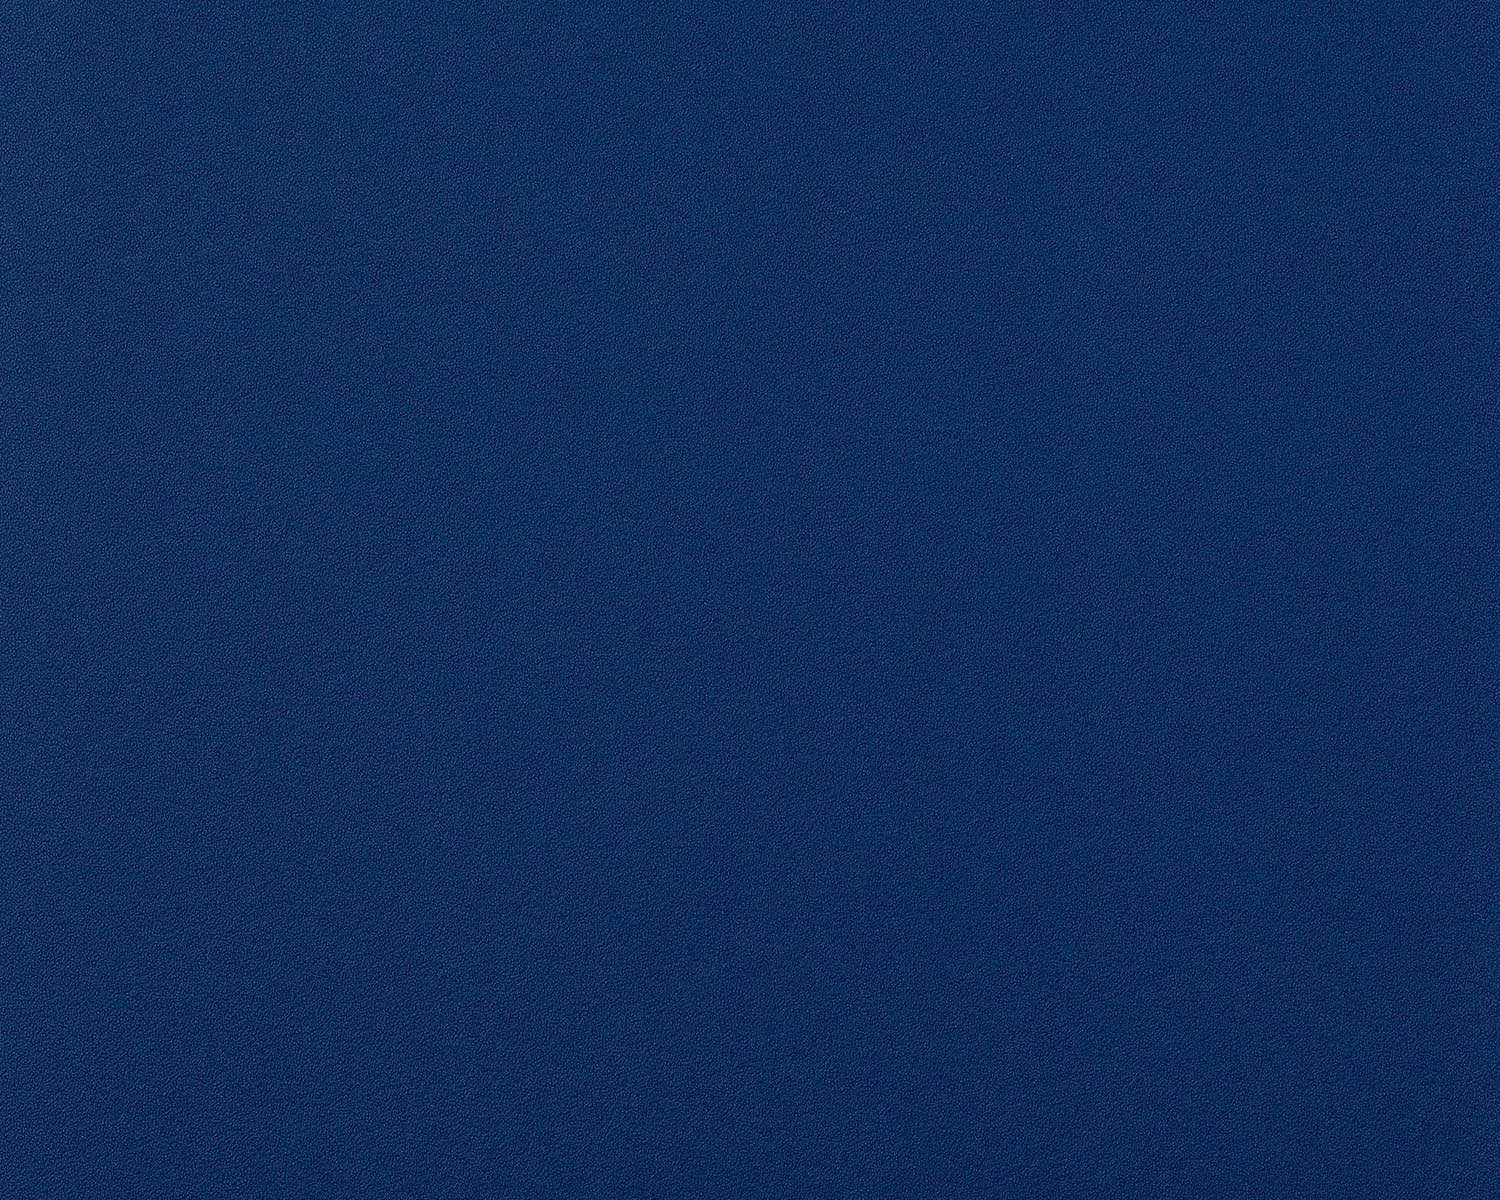 Plain Blue Wallpaper HD Image